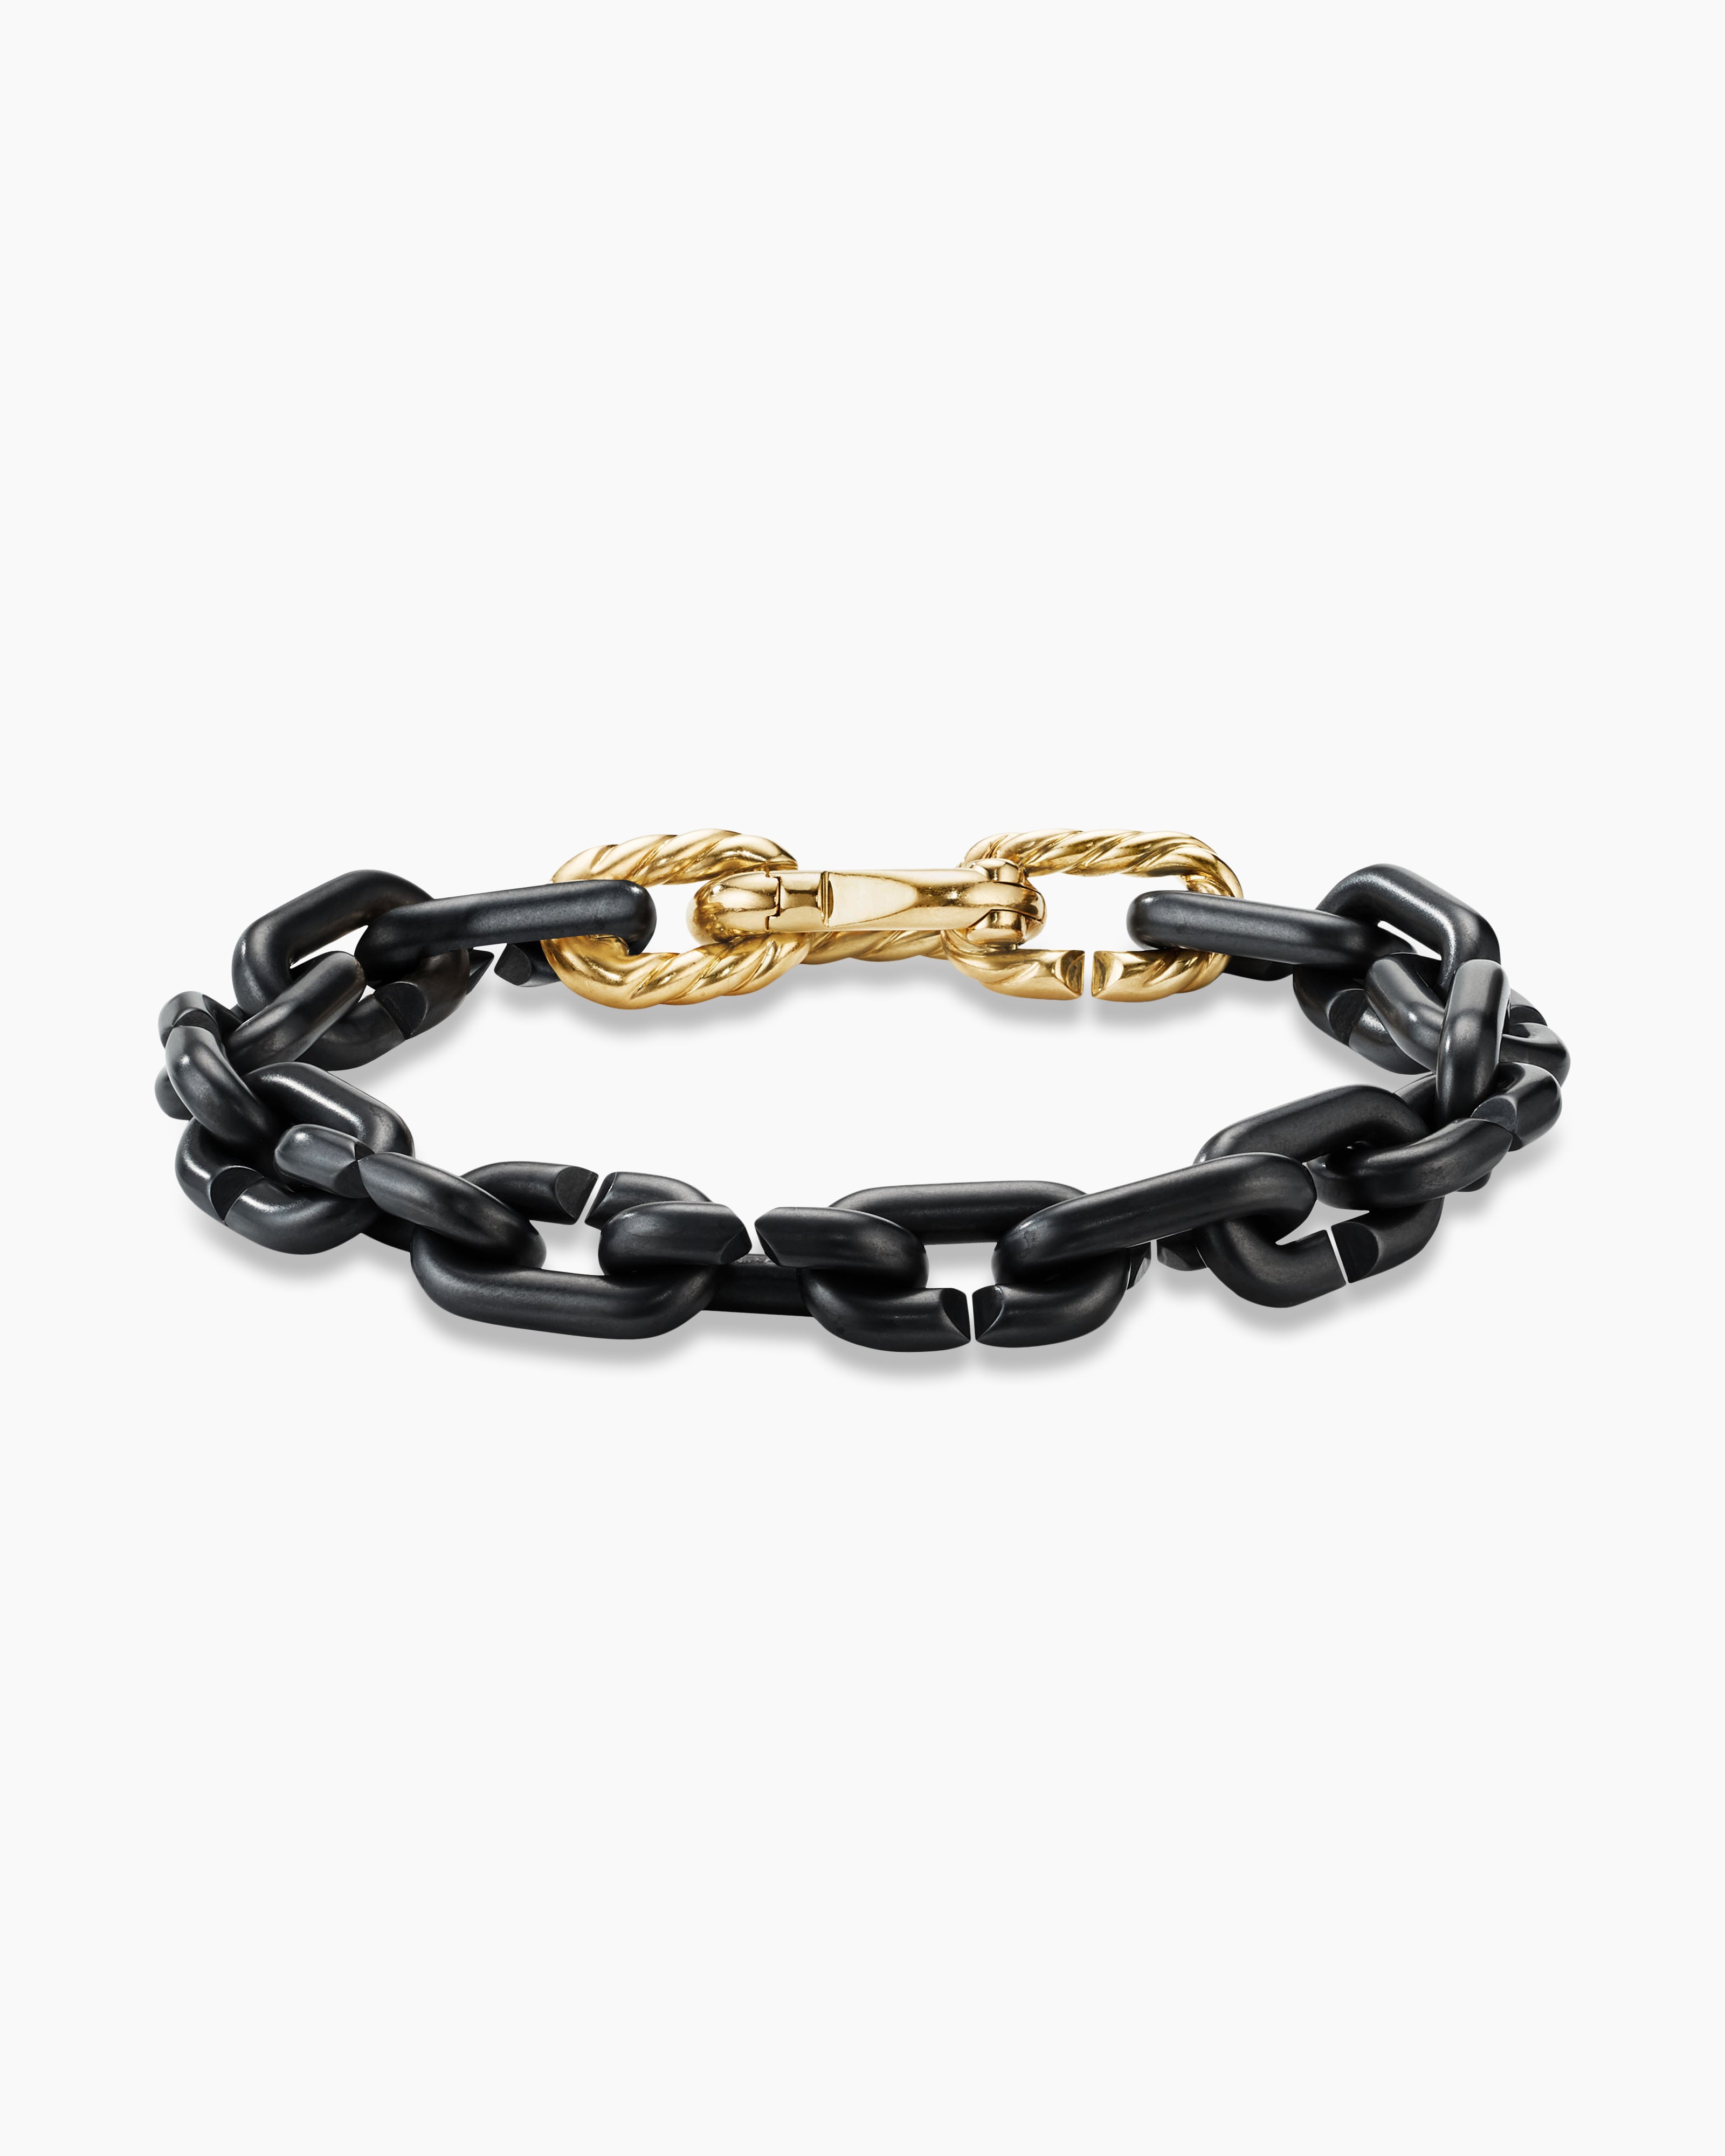 Chain Links Bracelet in Black Titanium with 18K Yellow Gold, 10mm | David  Yurman